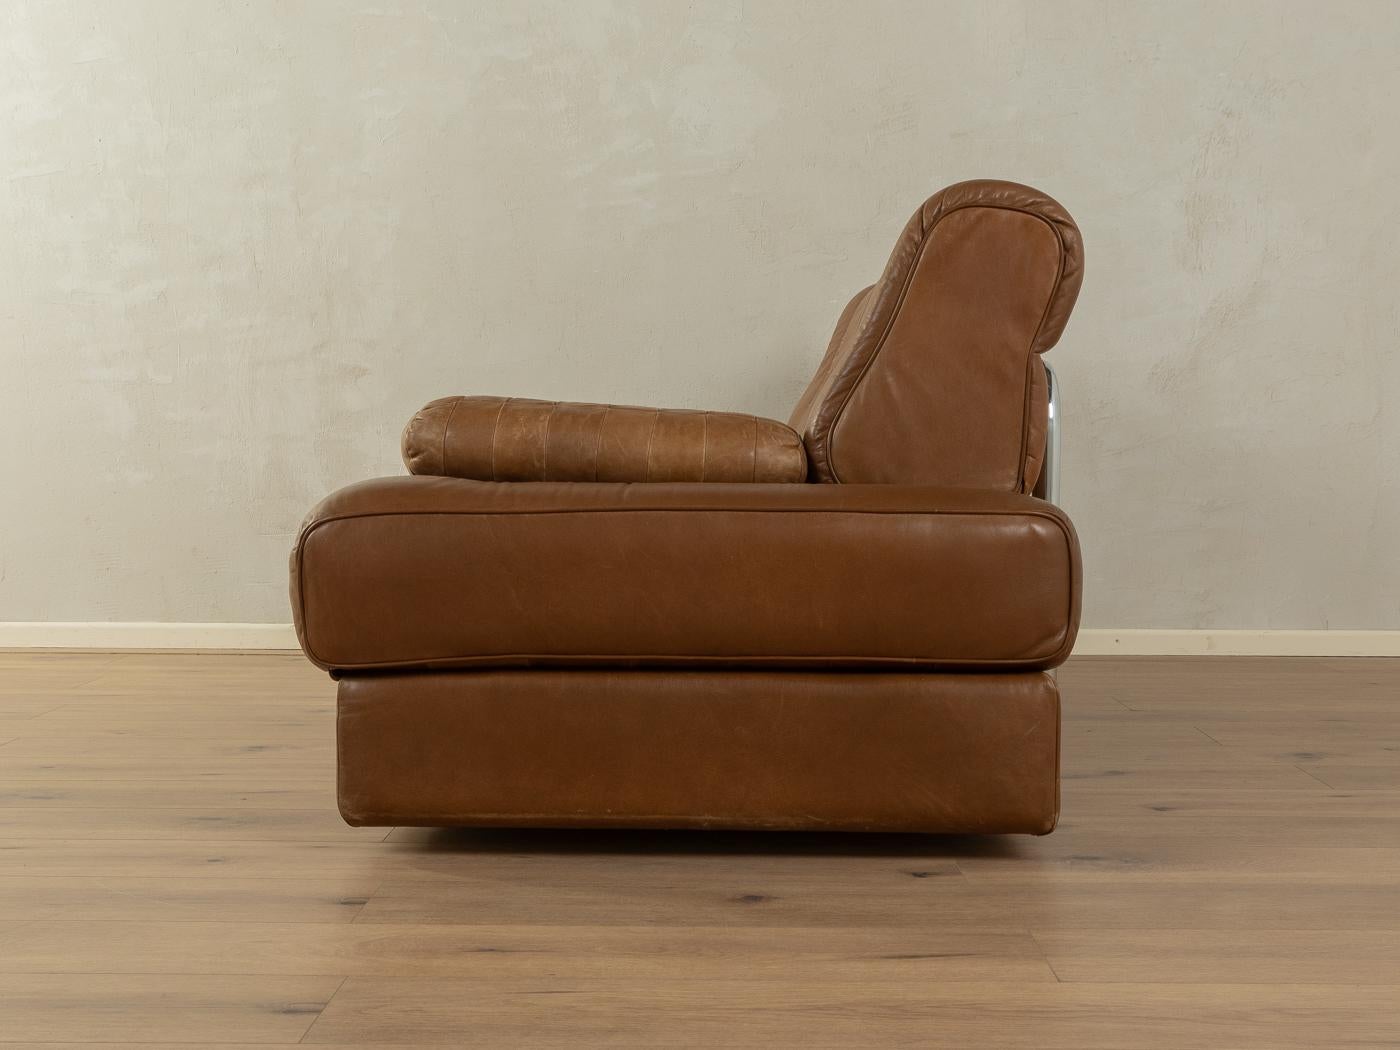  Convertible sofa, de Sede, DS-85  For Sale 6